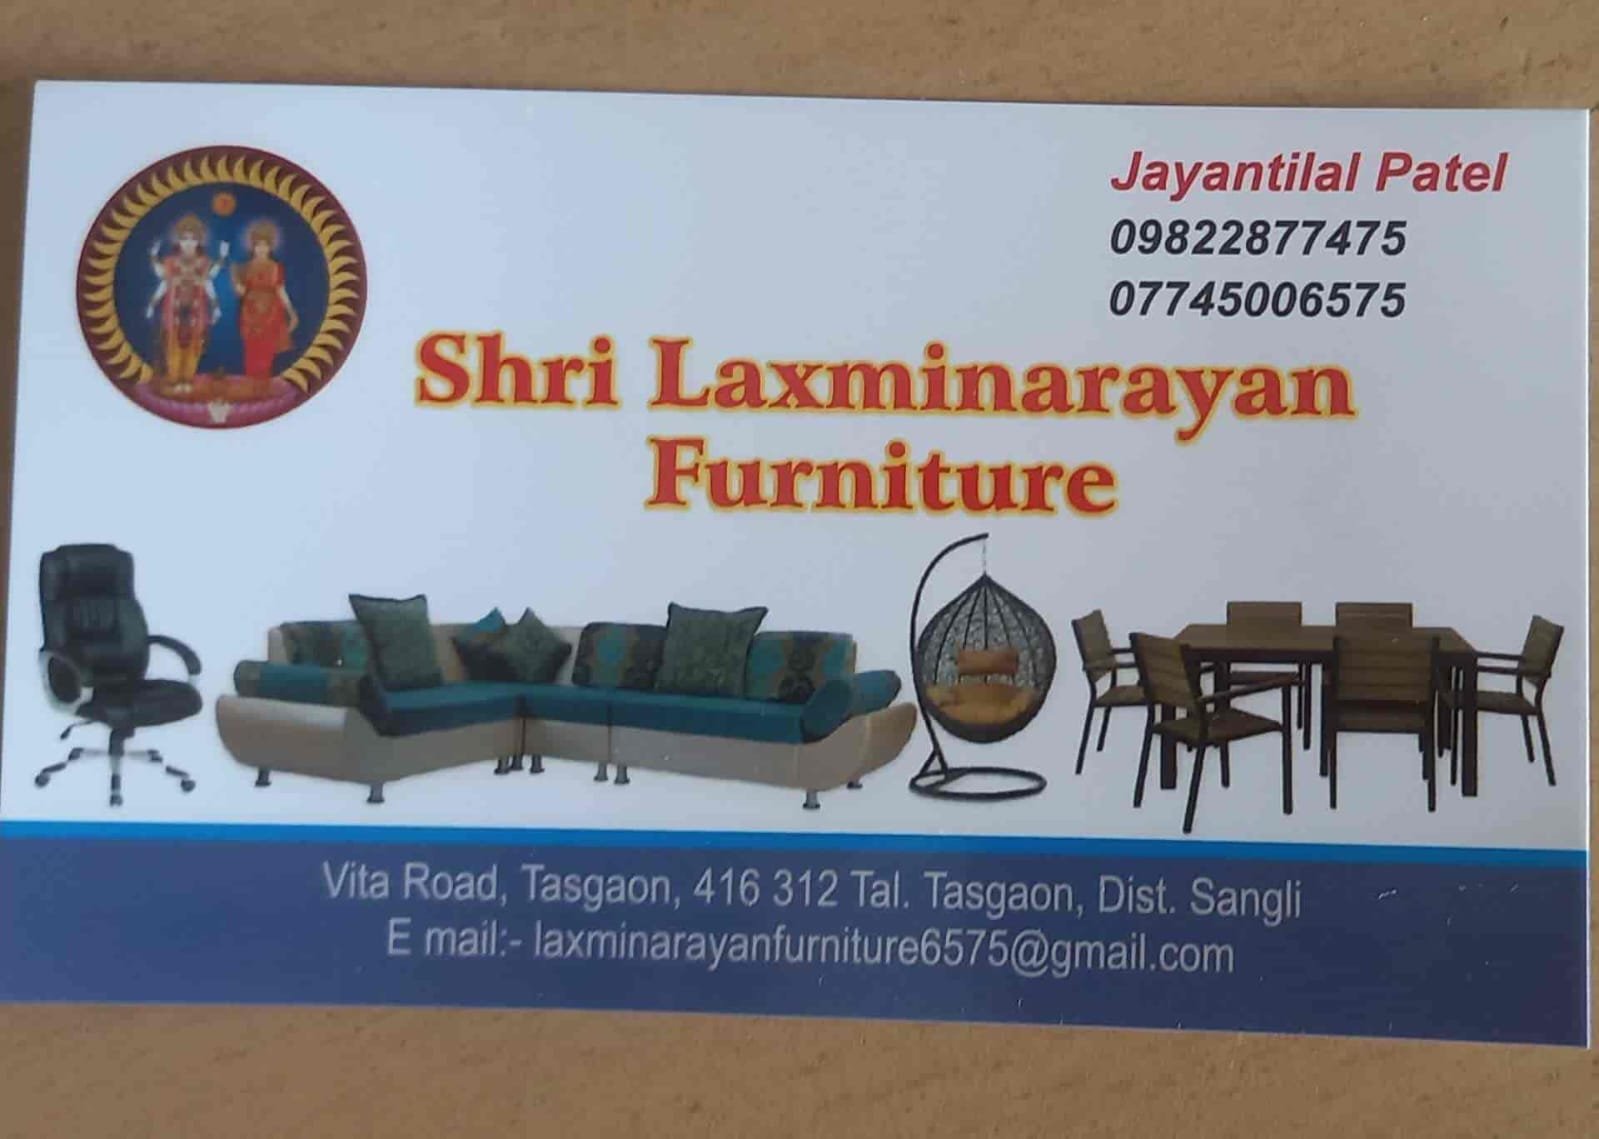 Shri Laxminarayan Furniture